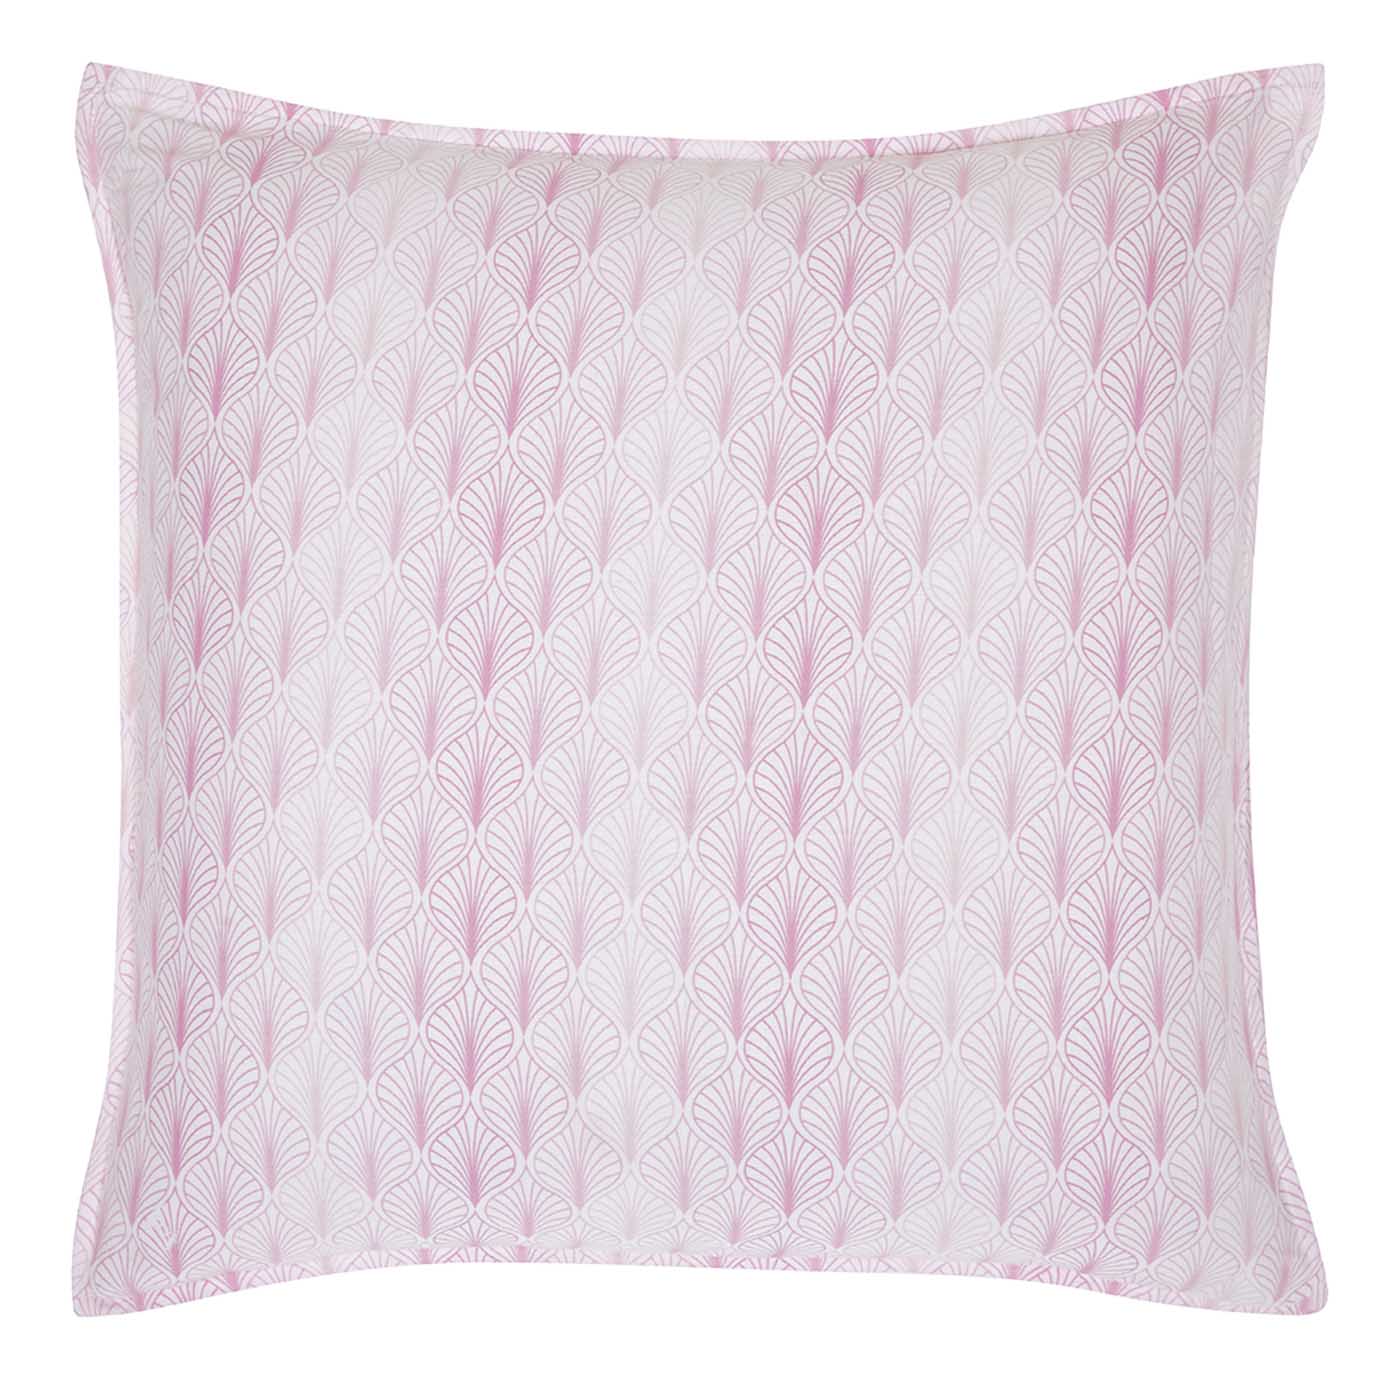 Summer Daze Pink European Pillowcase by Logan & Mason